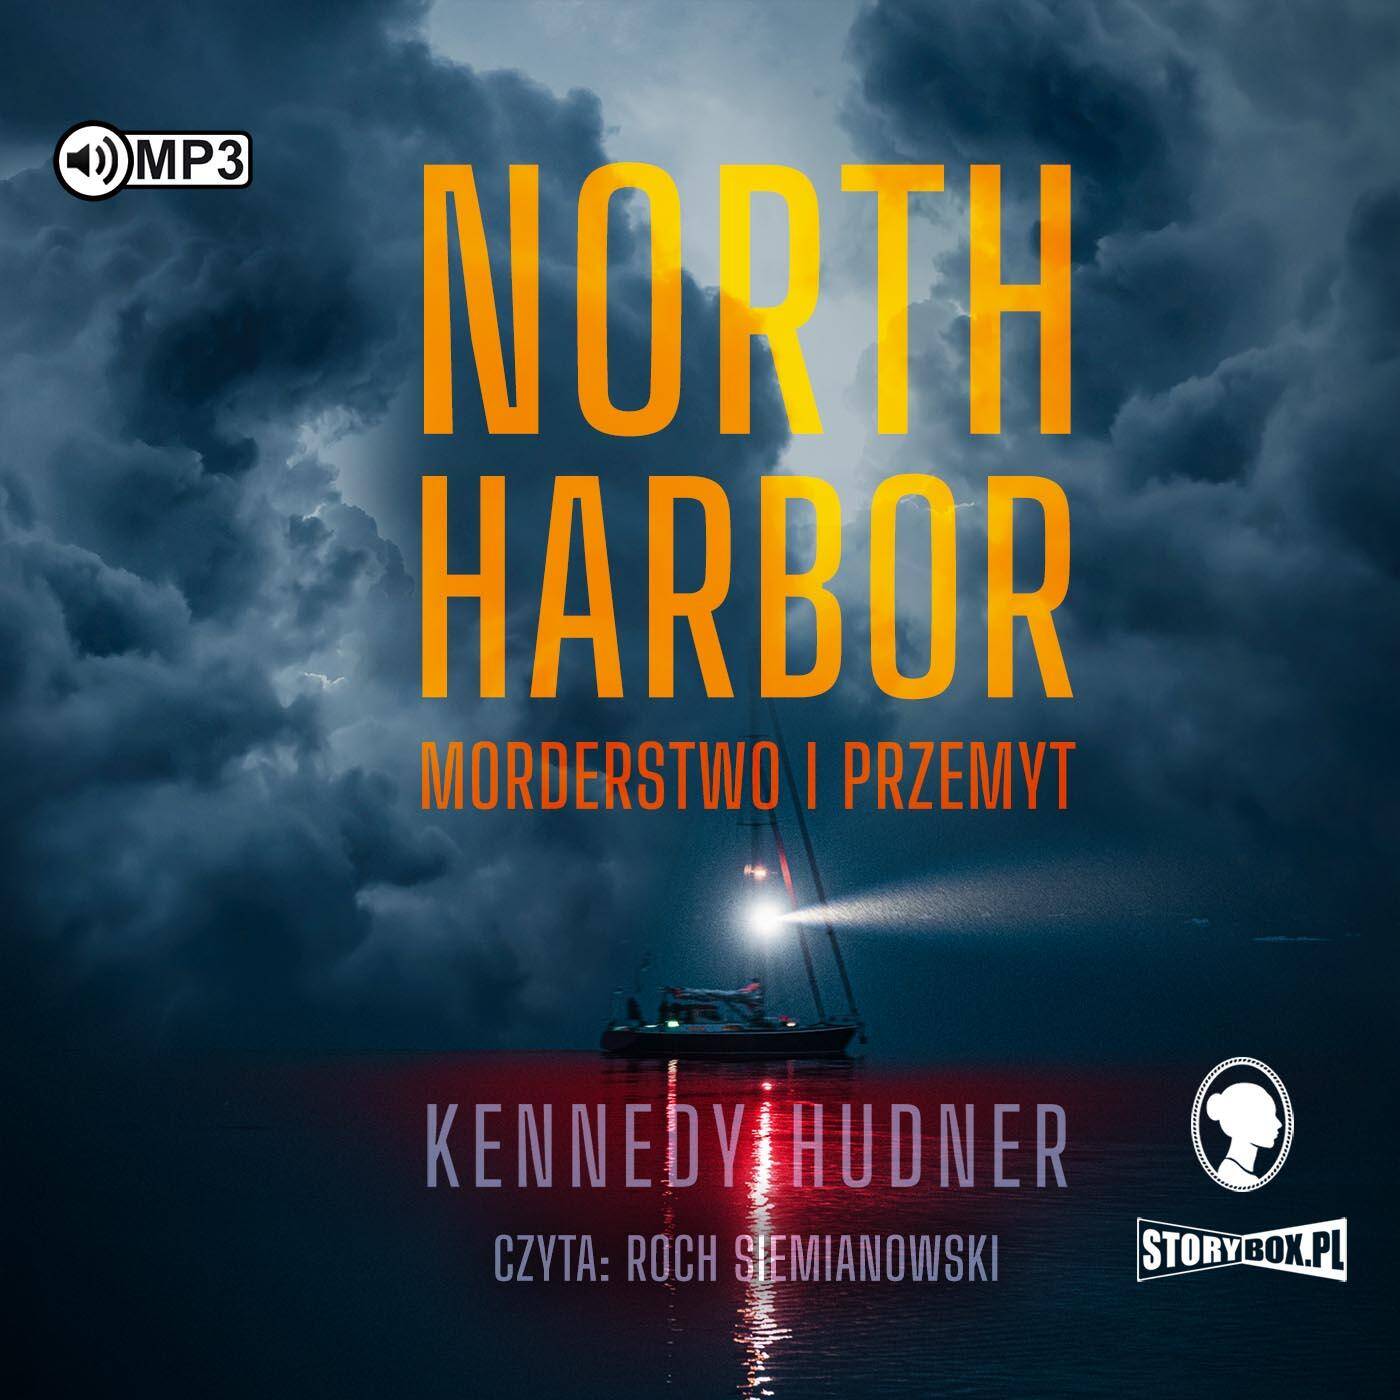 CD MP3 North Harbor. Morderstwo i przemyt